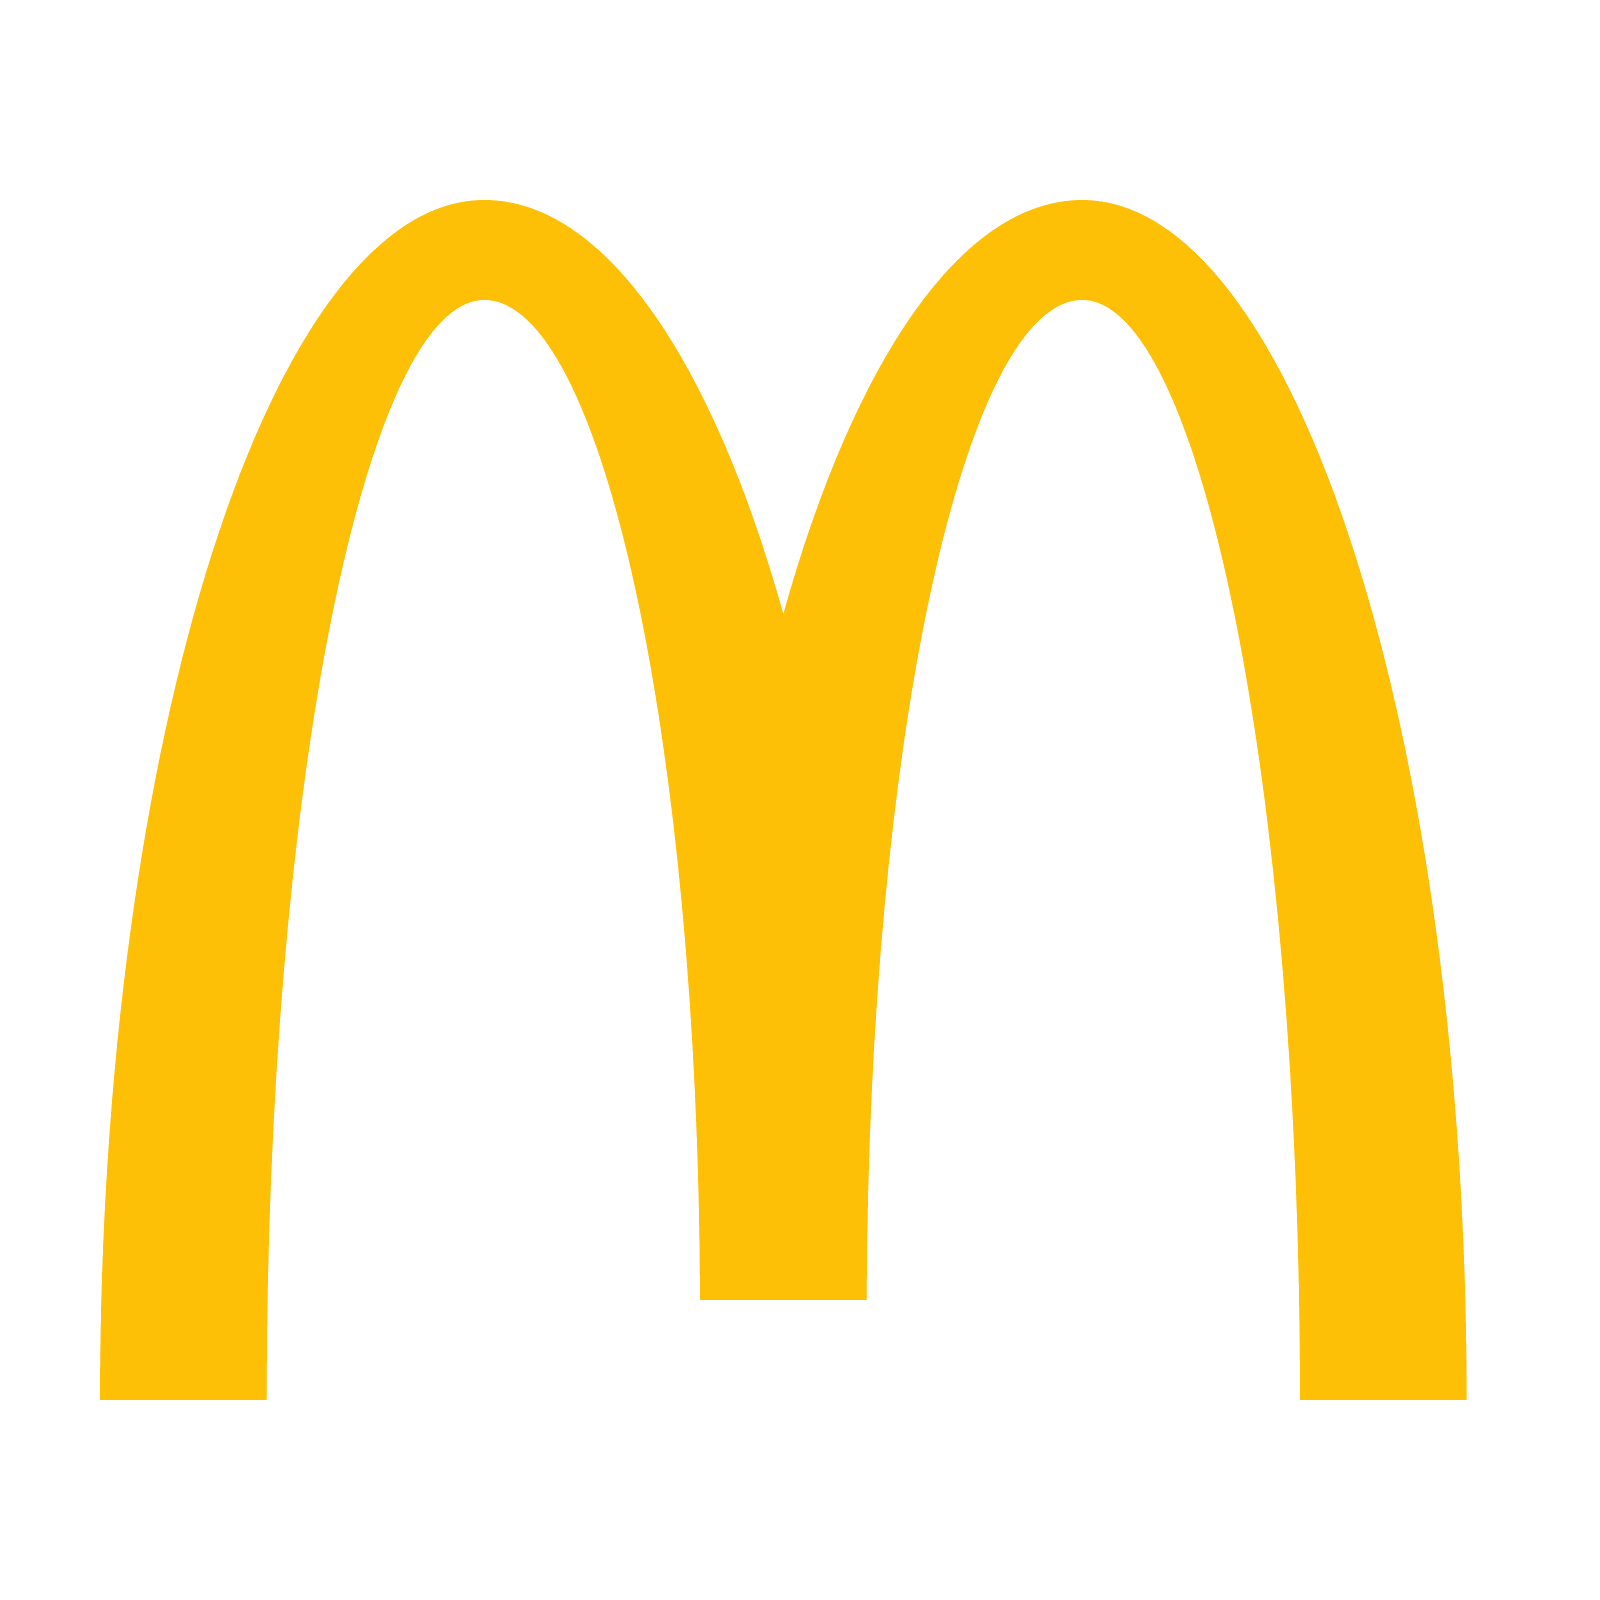 Golden Restaurant Mcdonald Mcdonald'S Ronald Arches Logo Clipart